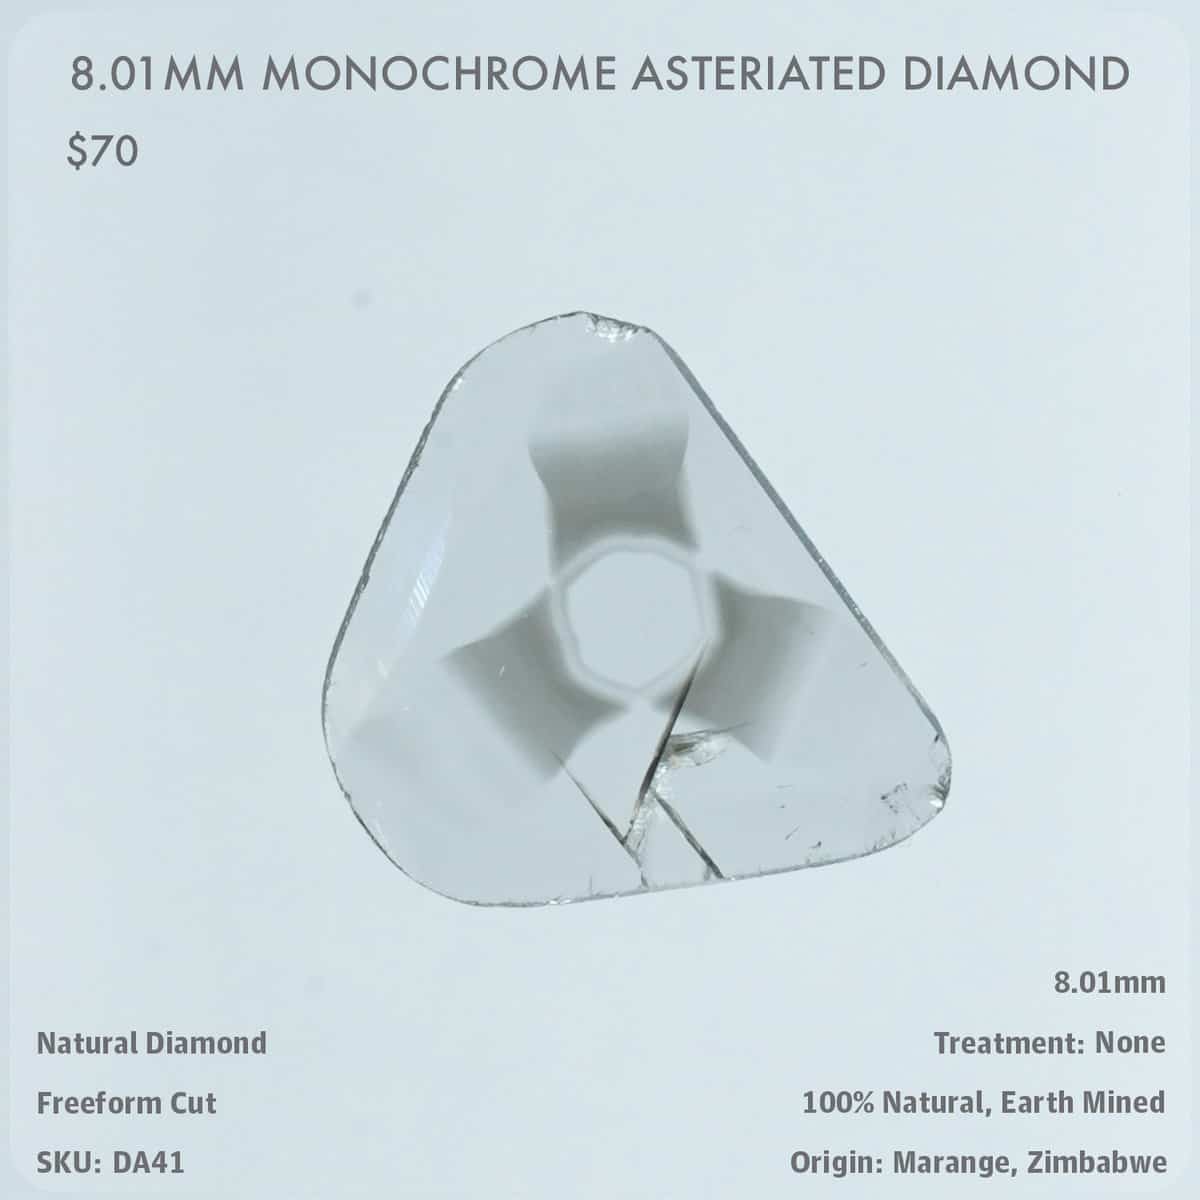 8.01mm Monochrome Asteriated Diamond